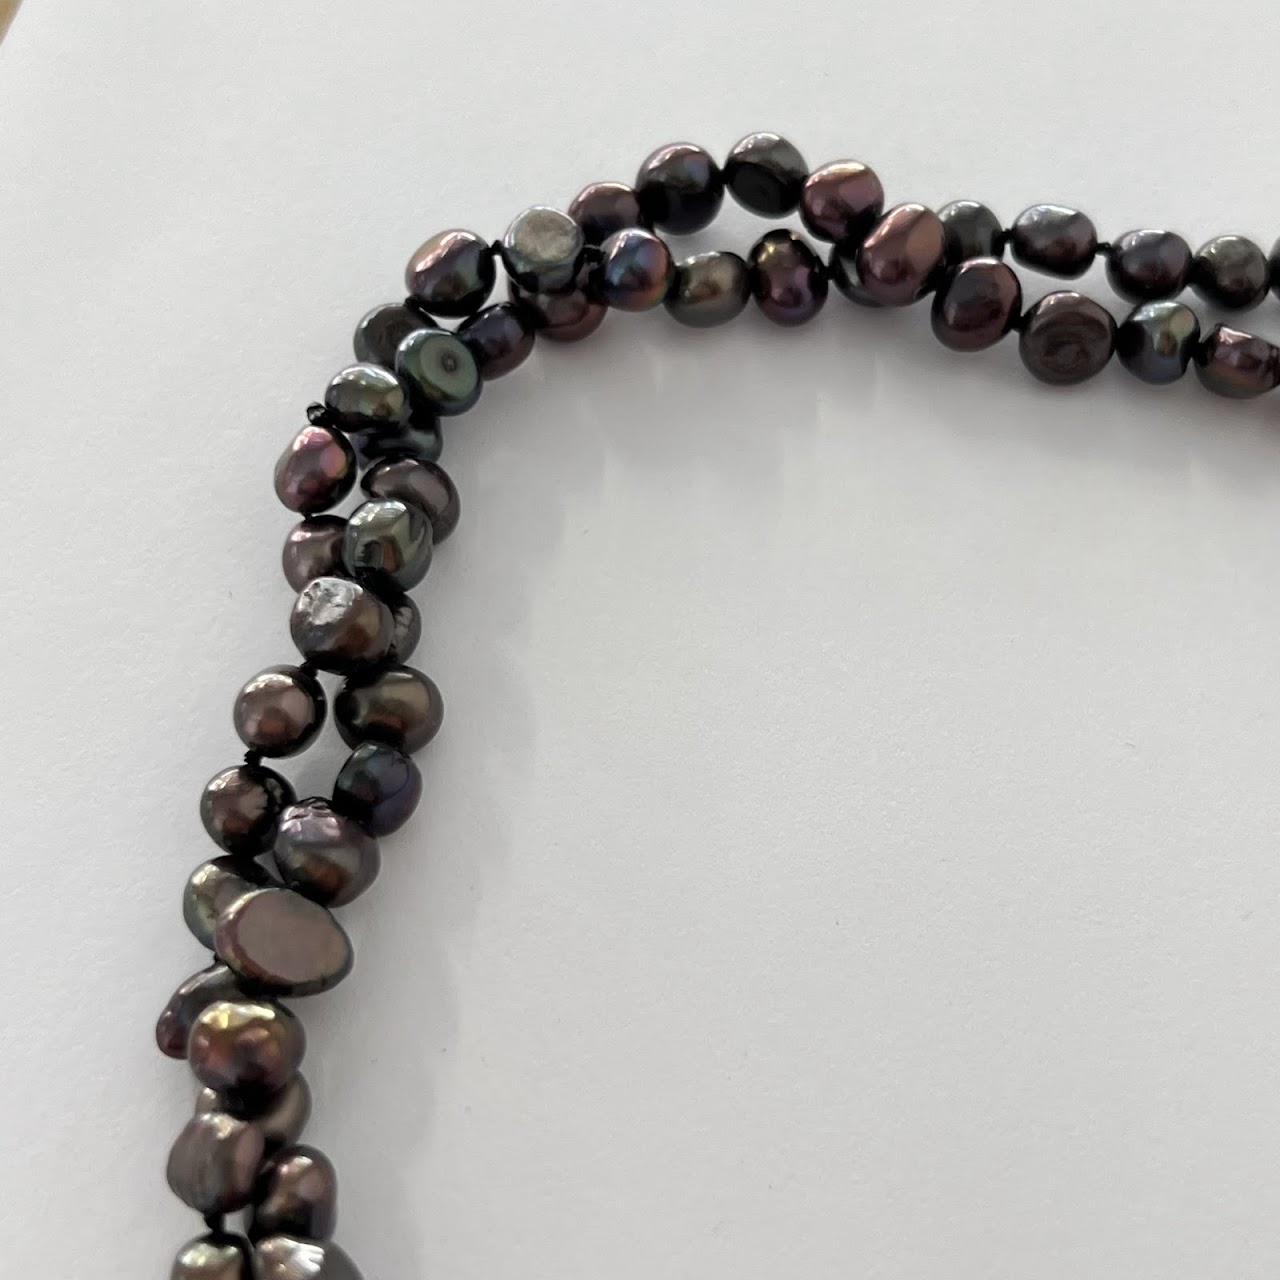 Freshwater Baroque Black Multicolor Pearl Strand Necklace